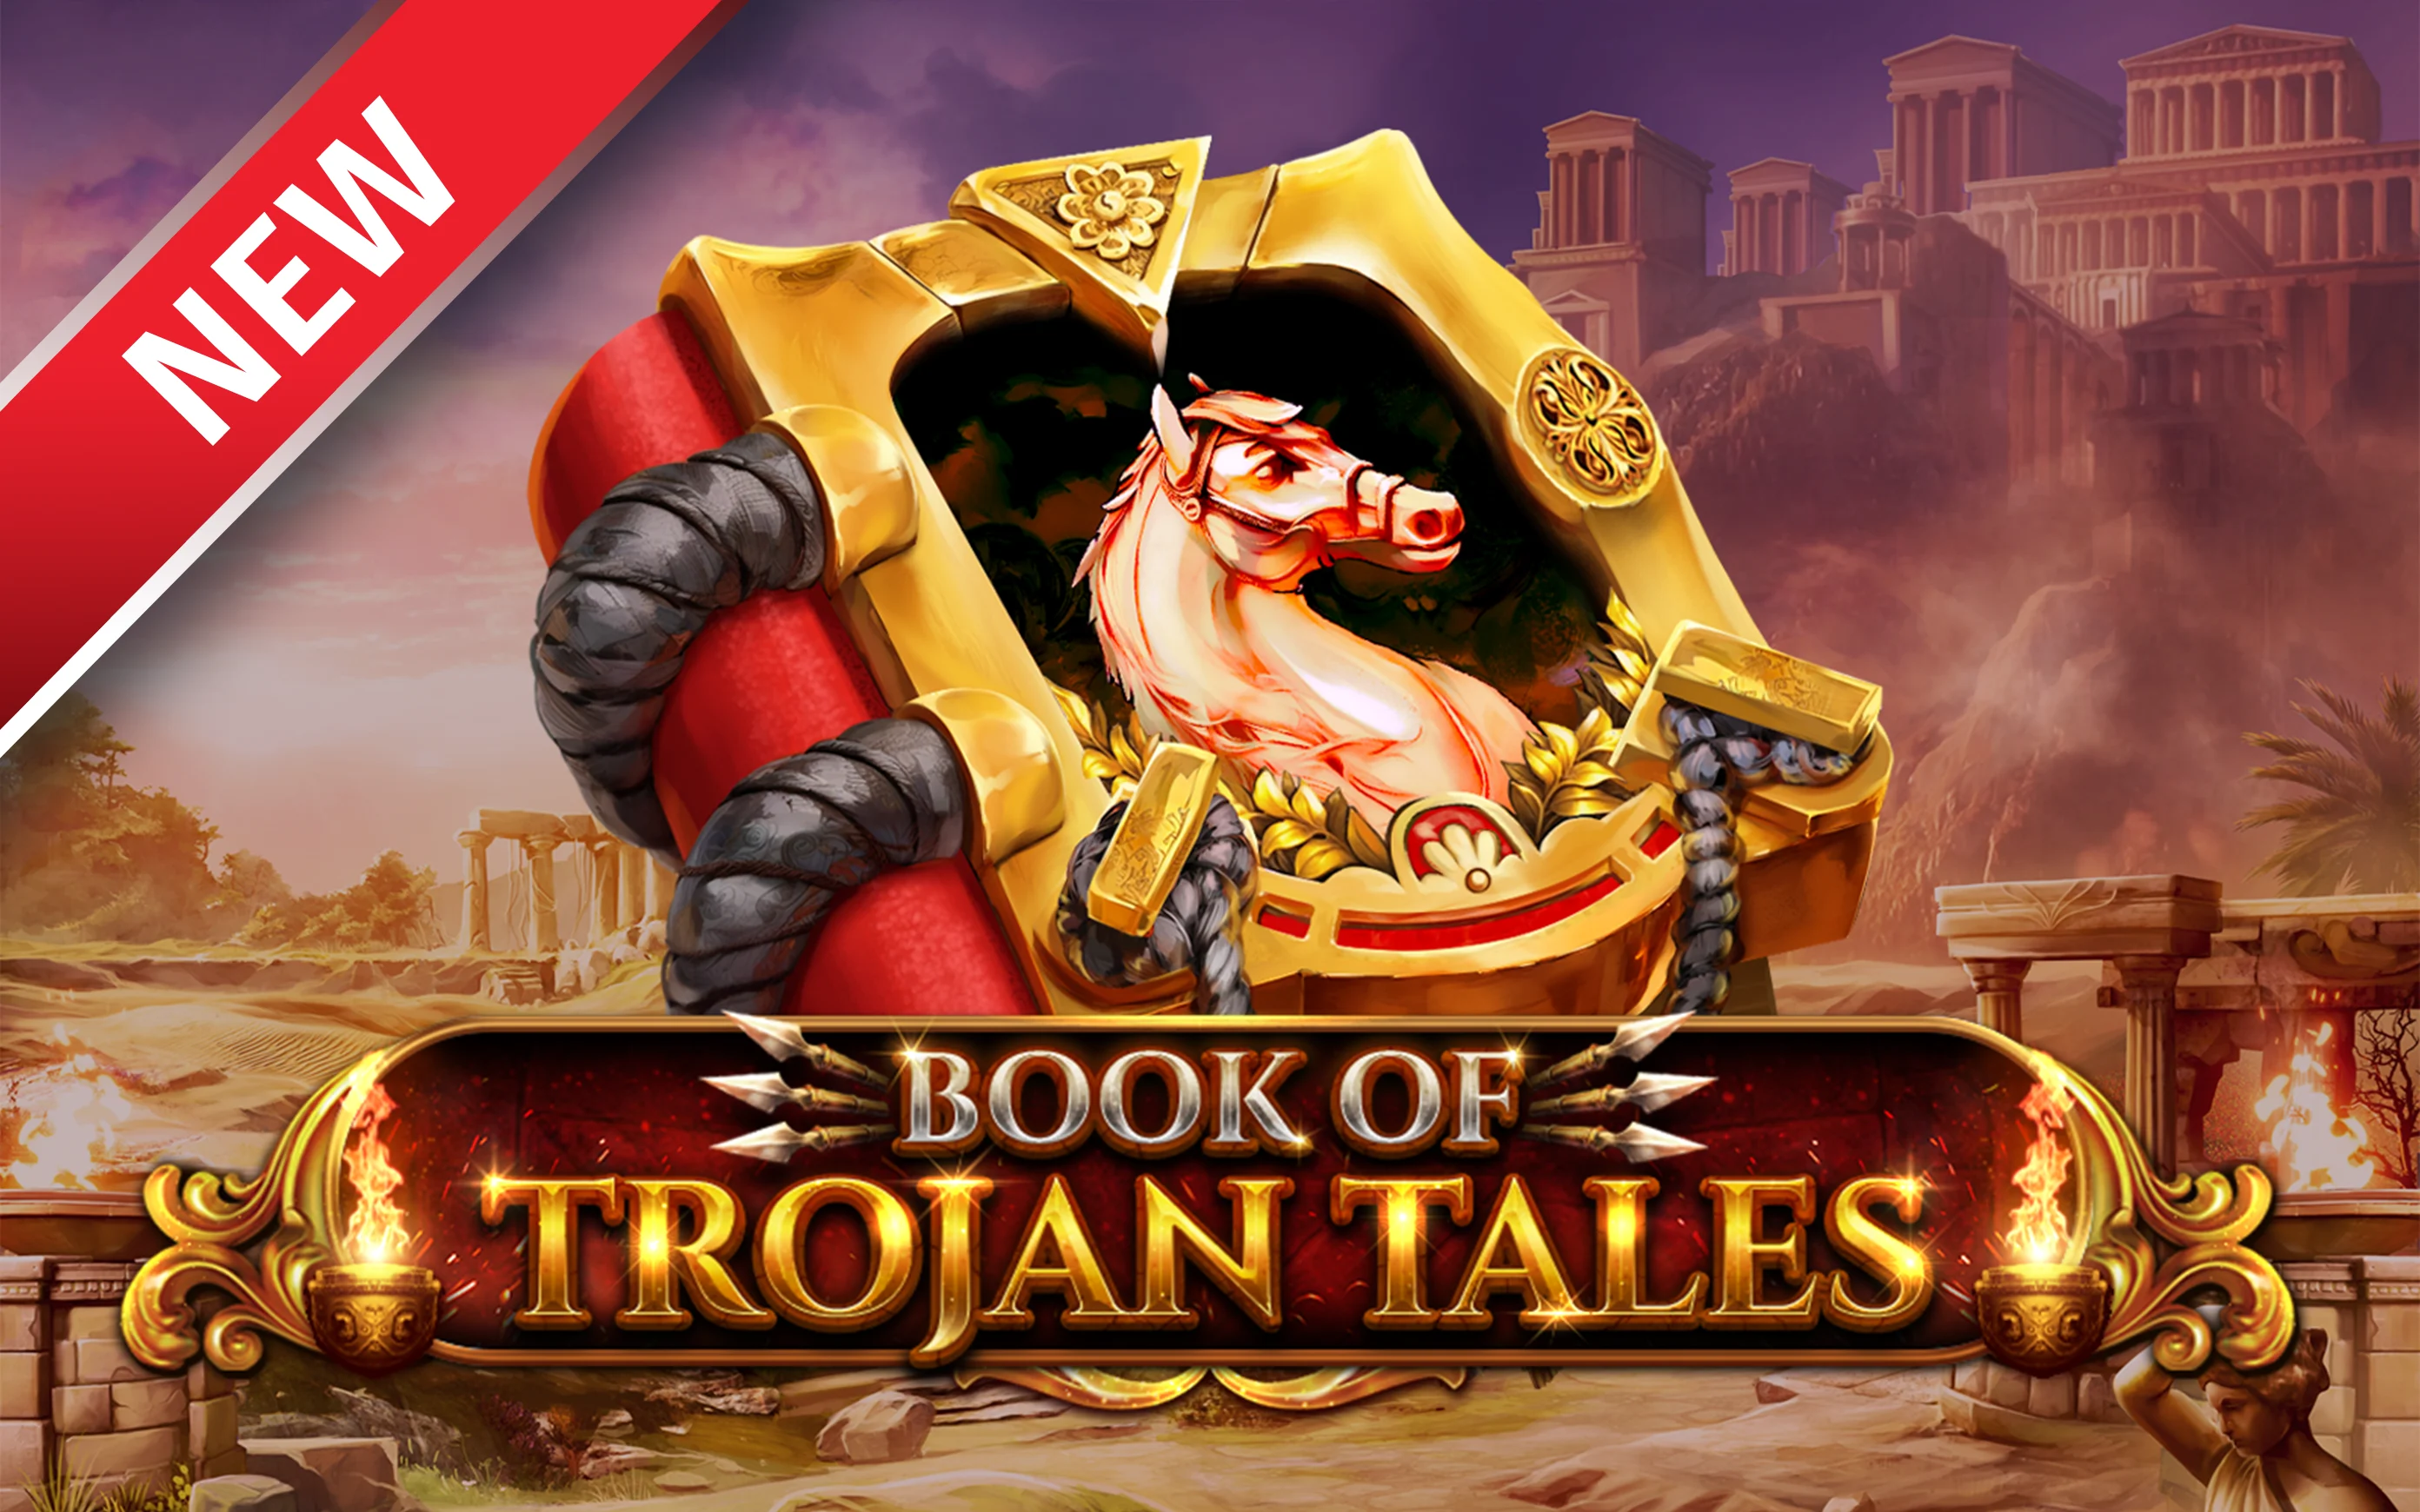 Speel Book of Trojan Tales op Starcasino.be online casino